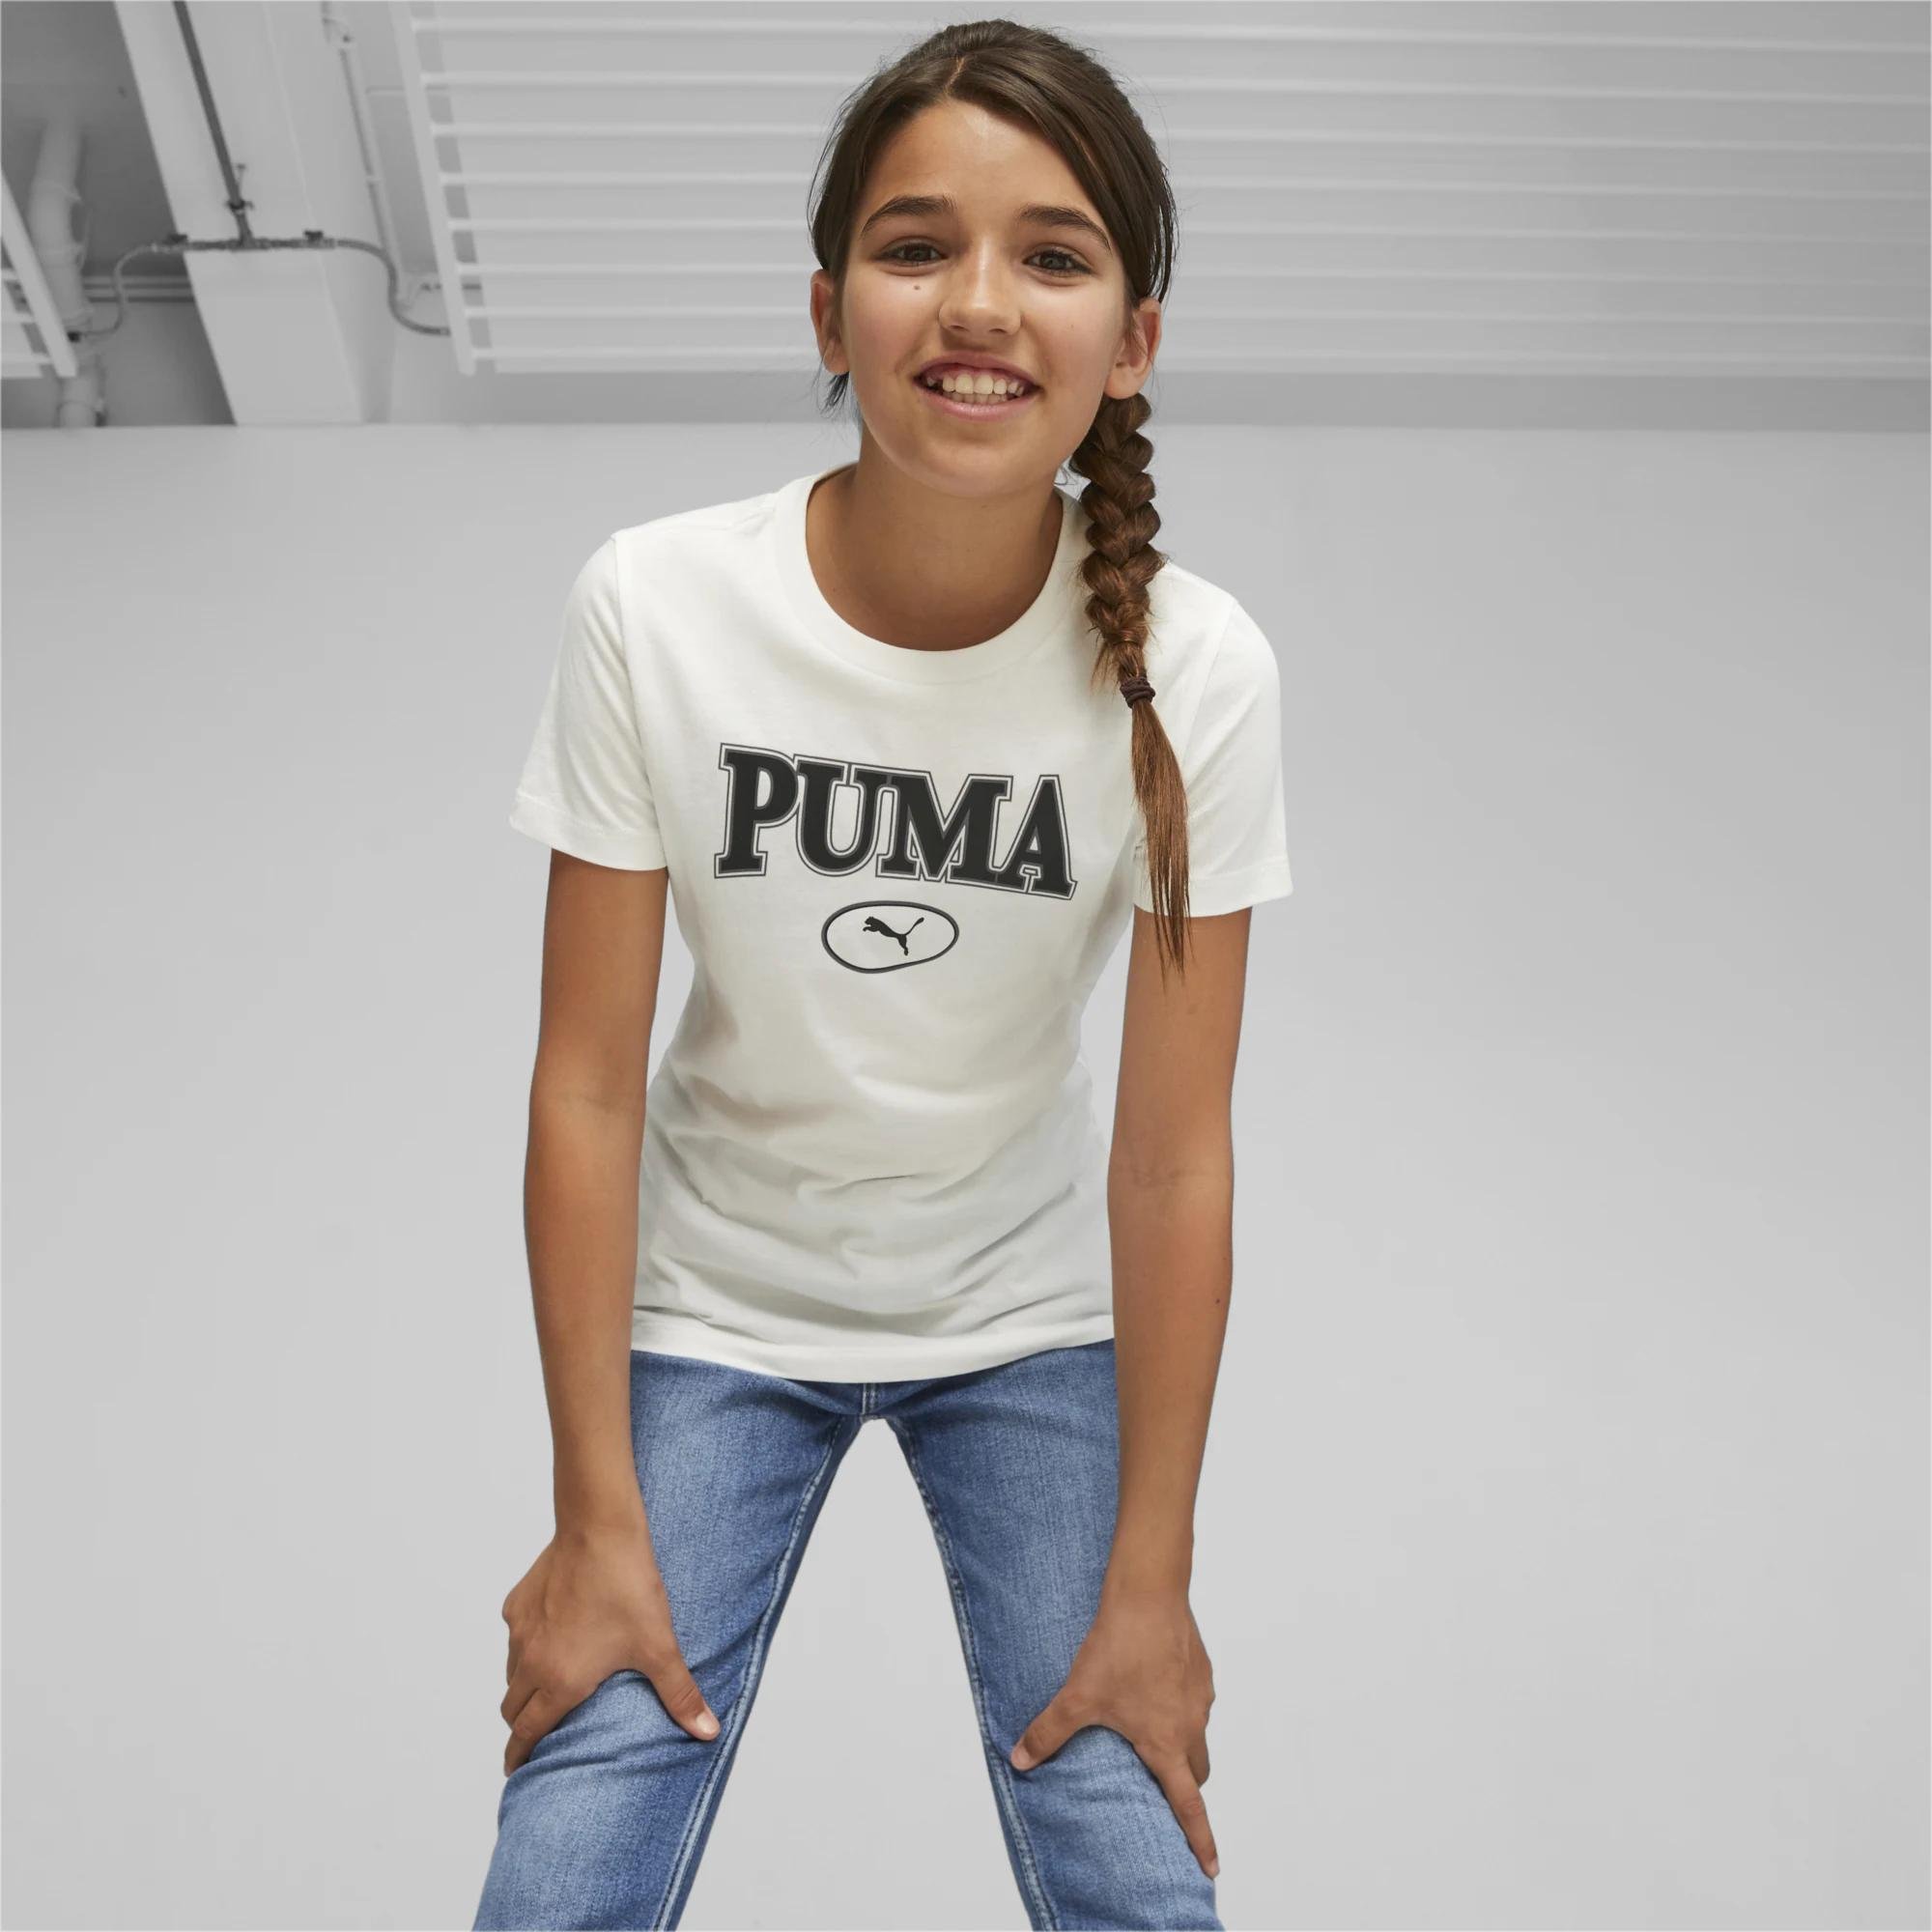 PUMA SQUAD Girls' Graphic Tee by PUMA